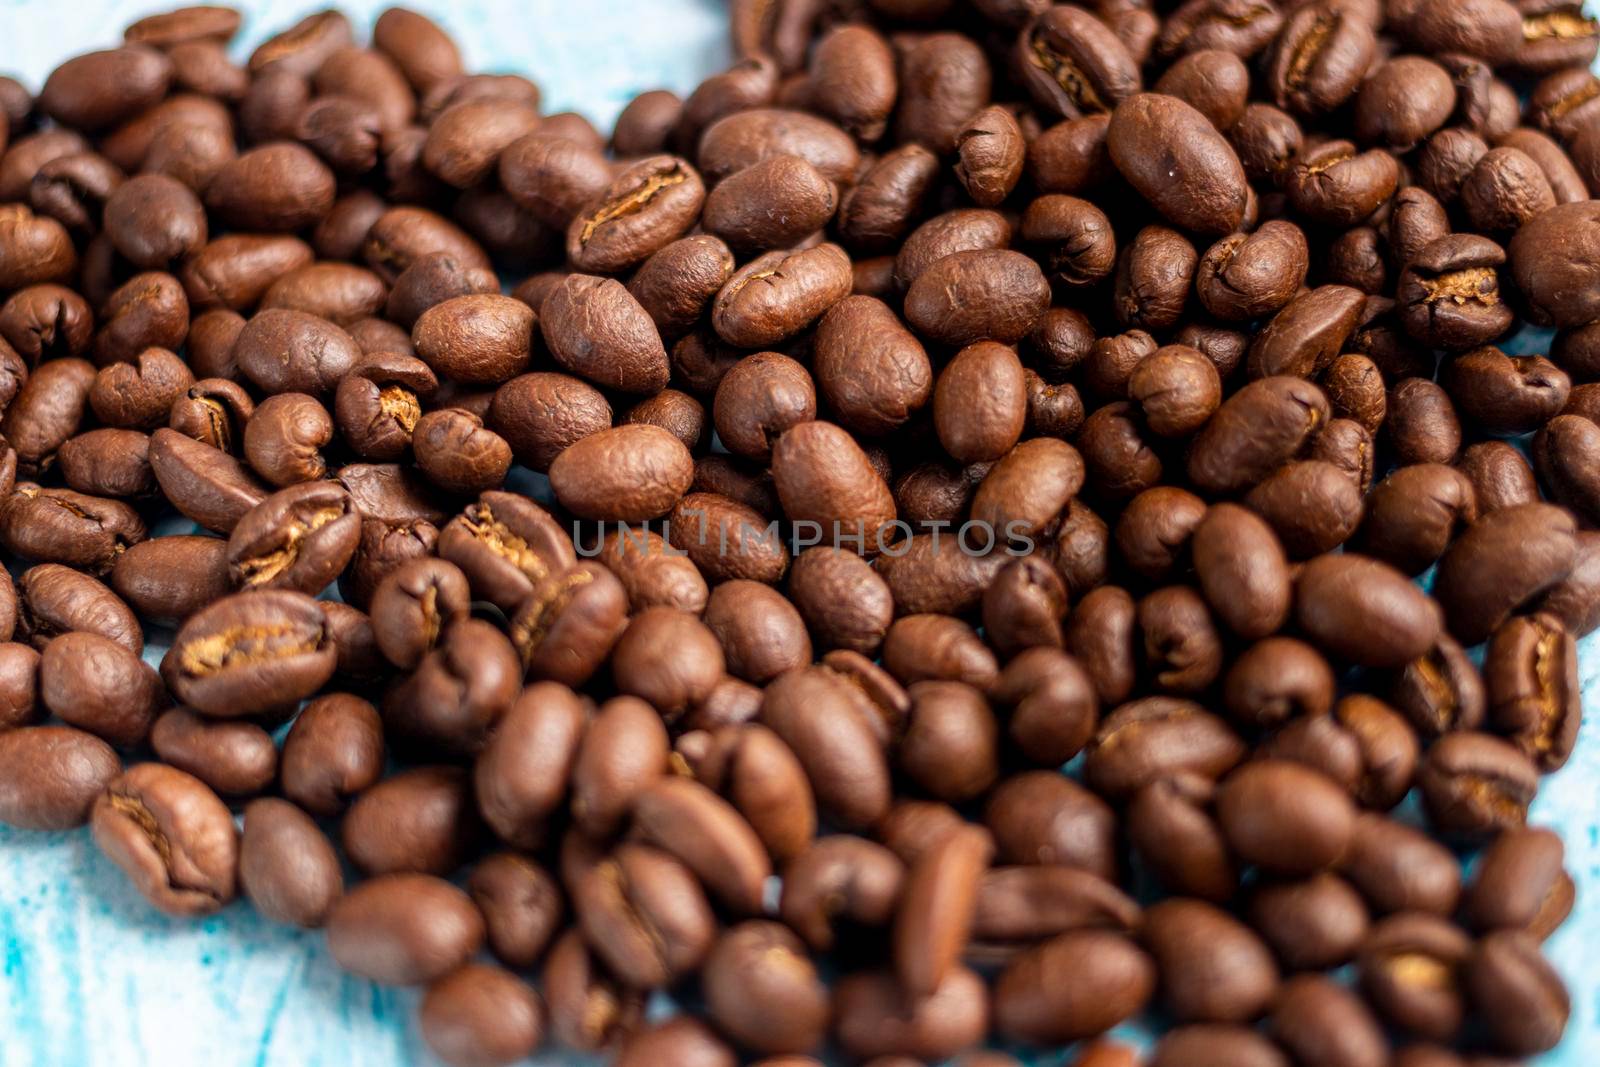 Heart shaped coffee grains on aquamarine background